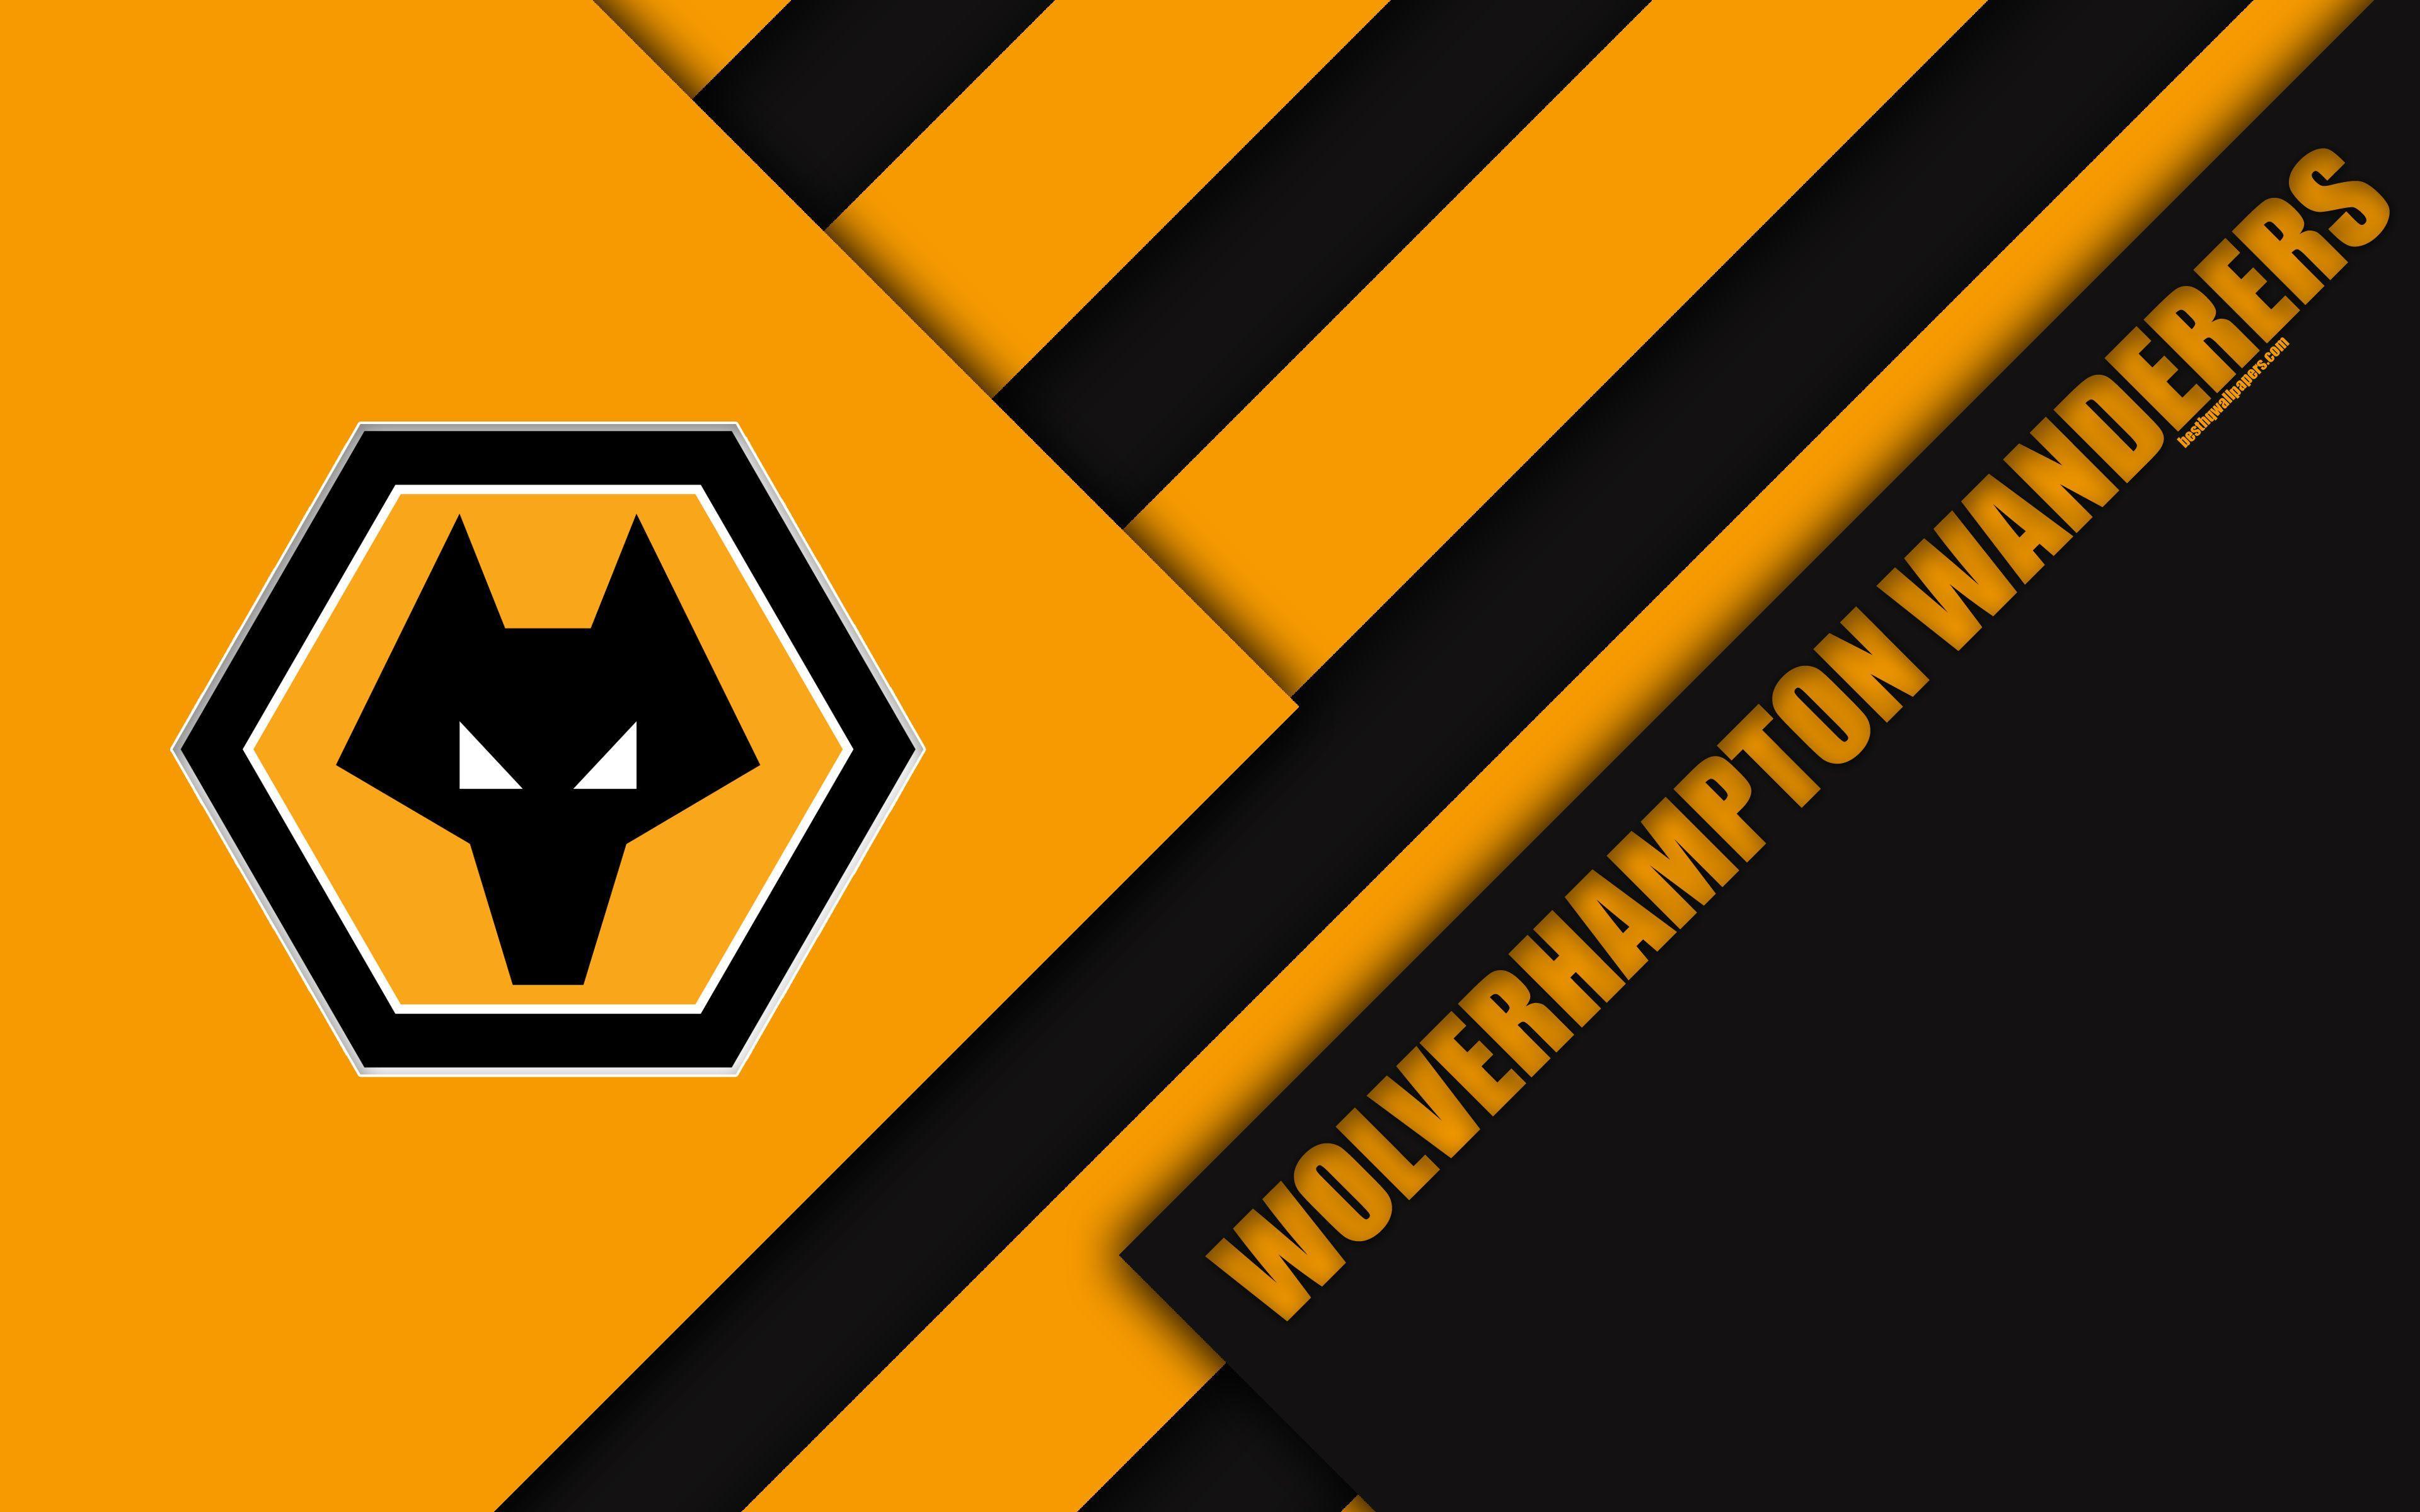 Download wallpaper Wolverhampton Wanderers FC, logo, 4k, orange